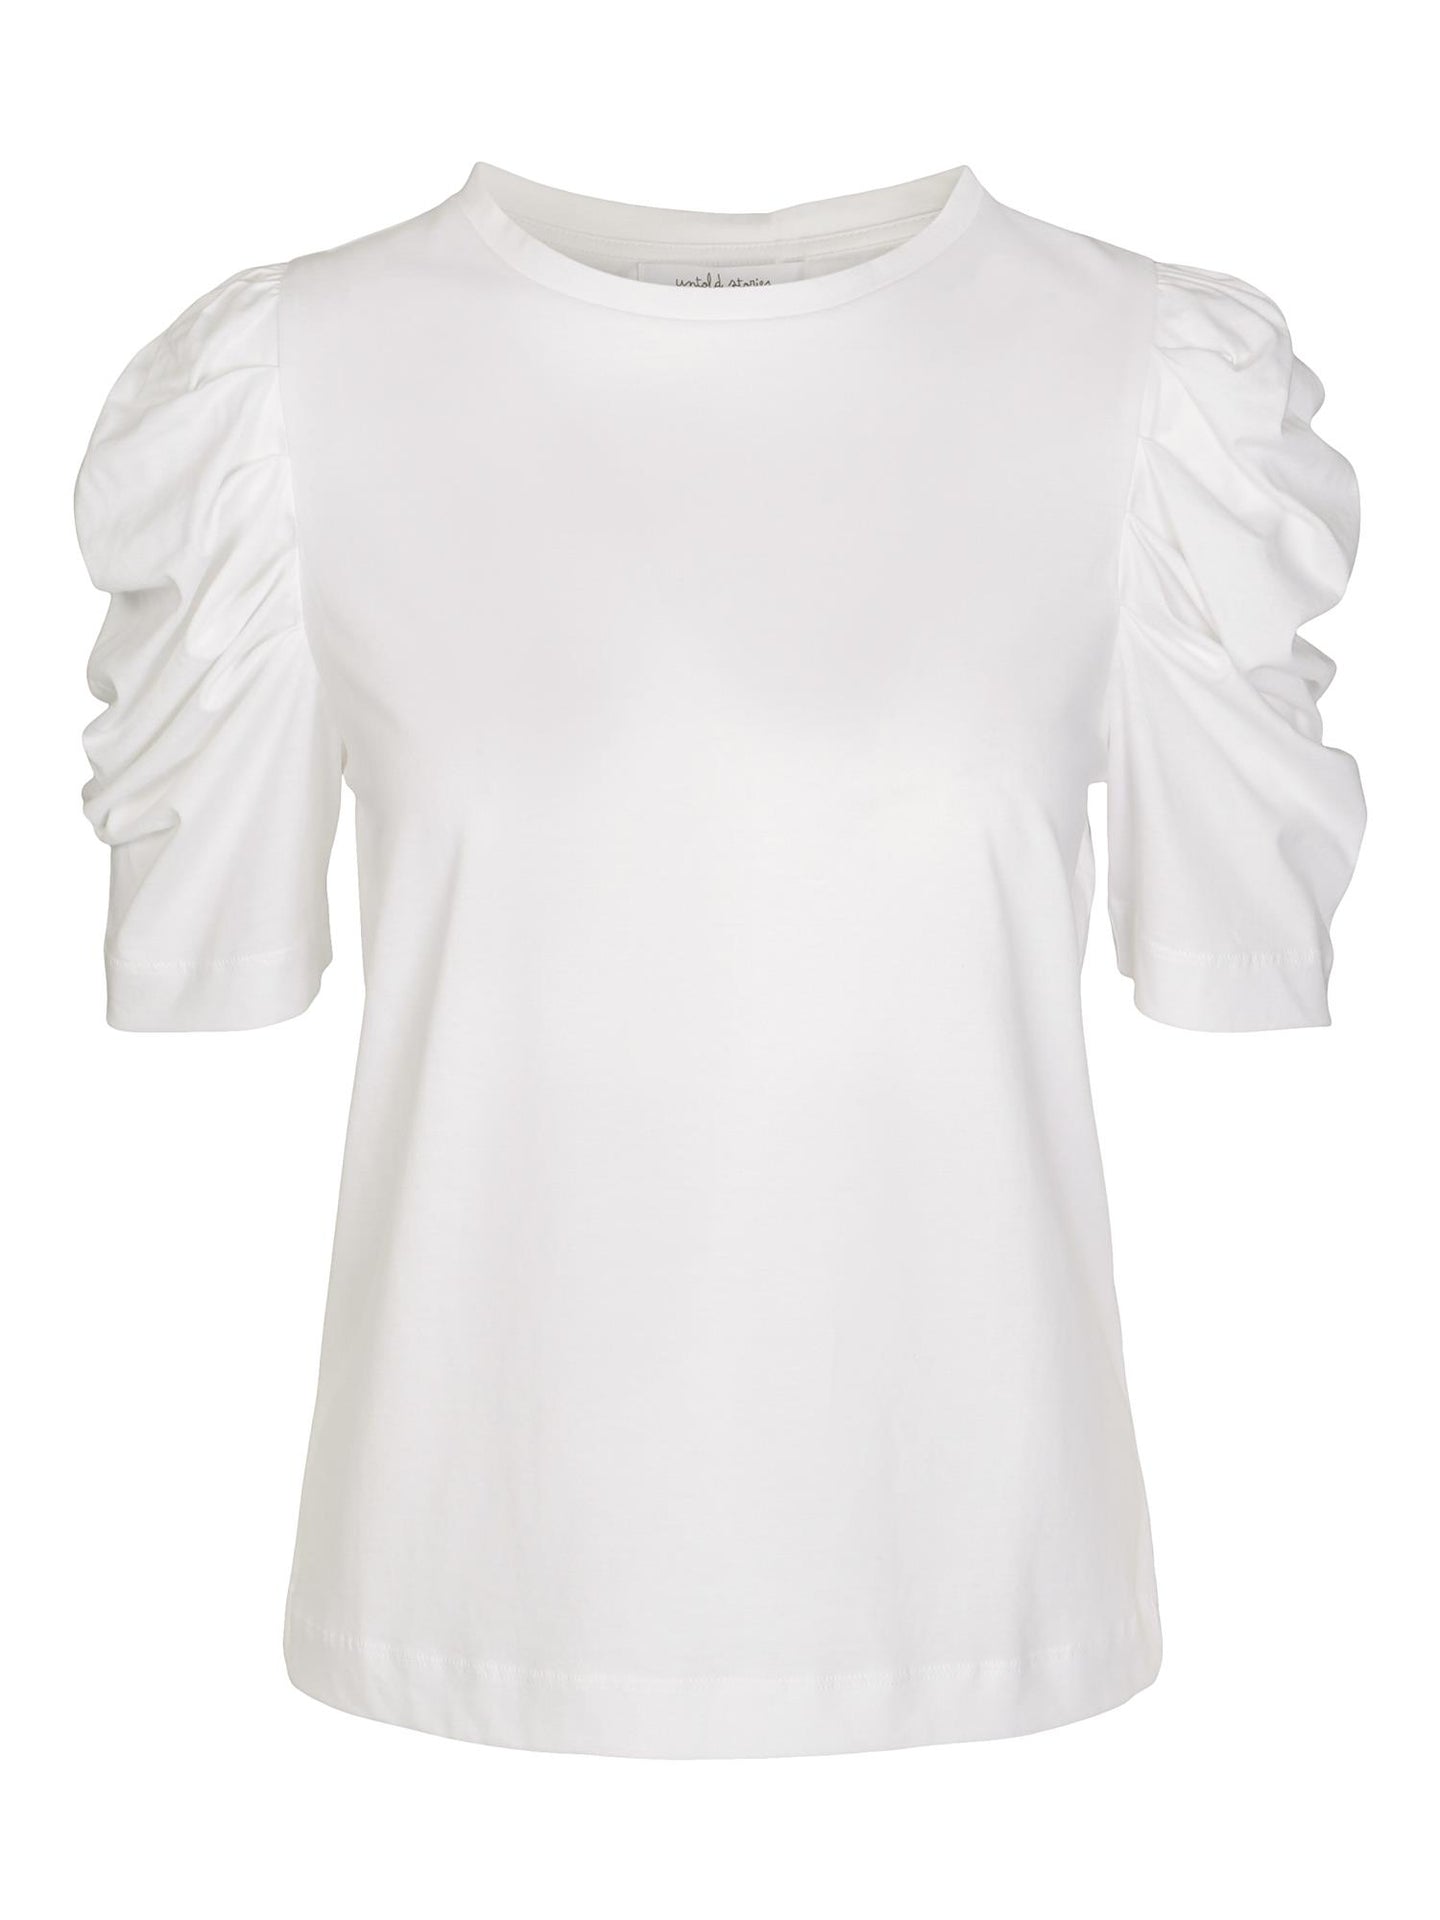 Empire SS blouse white